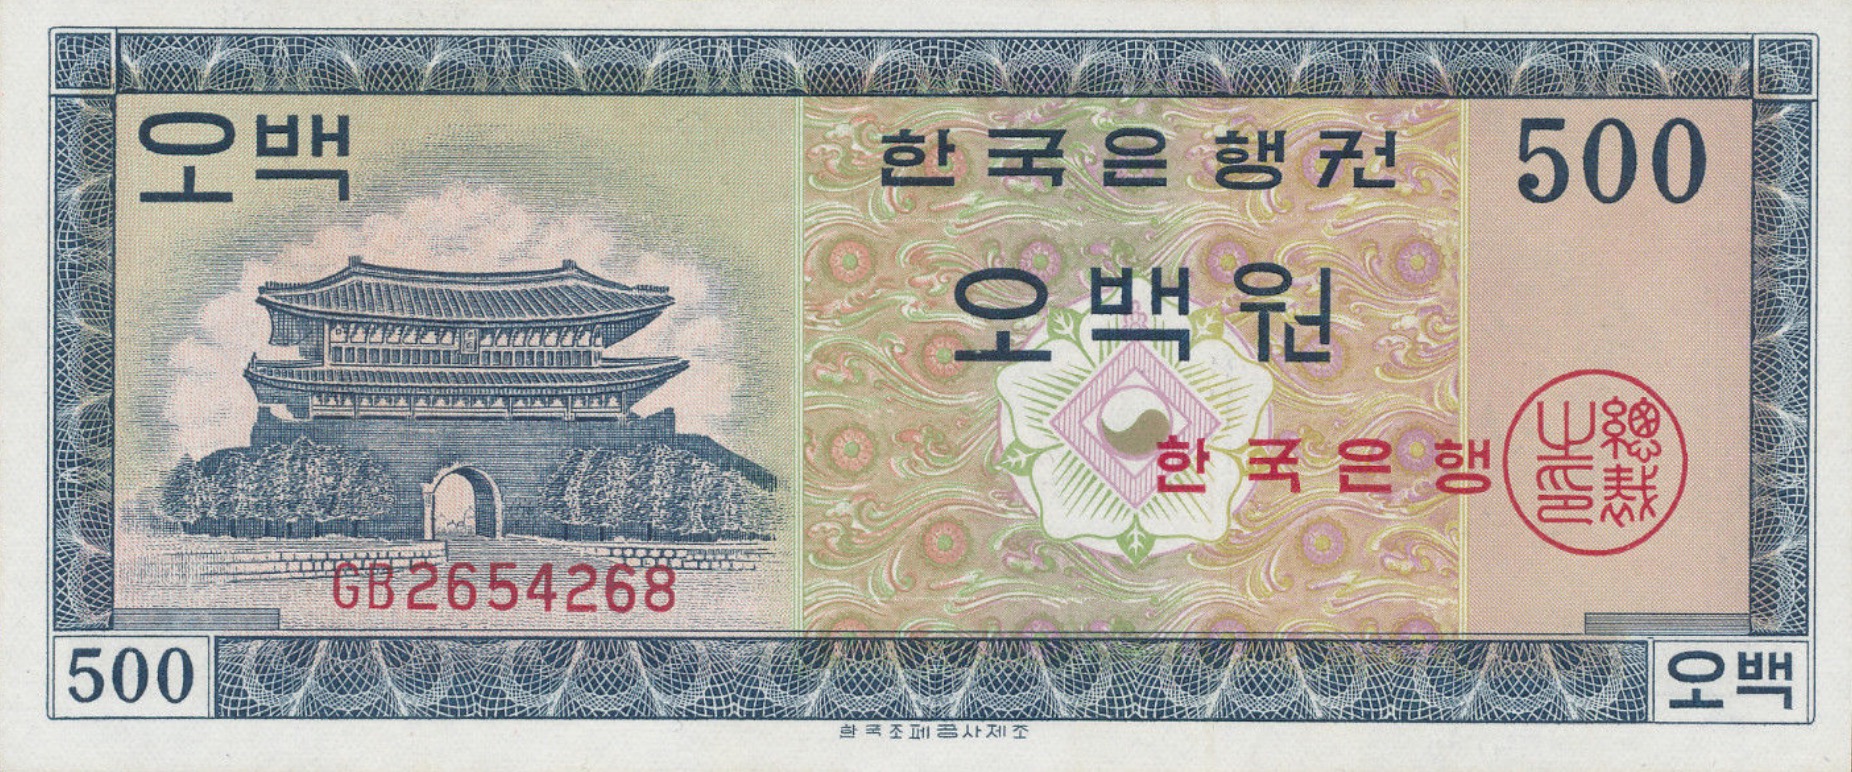 500 South Korean won banknote (Pagoda 1962 issue)